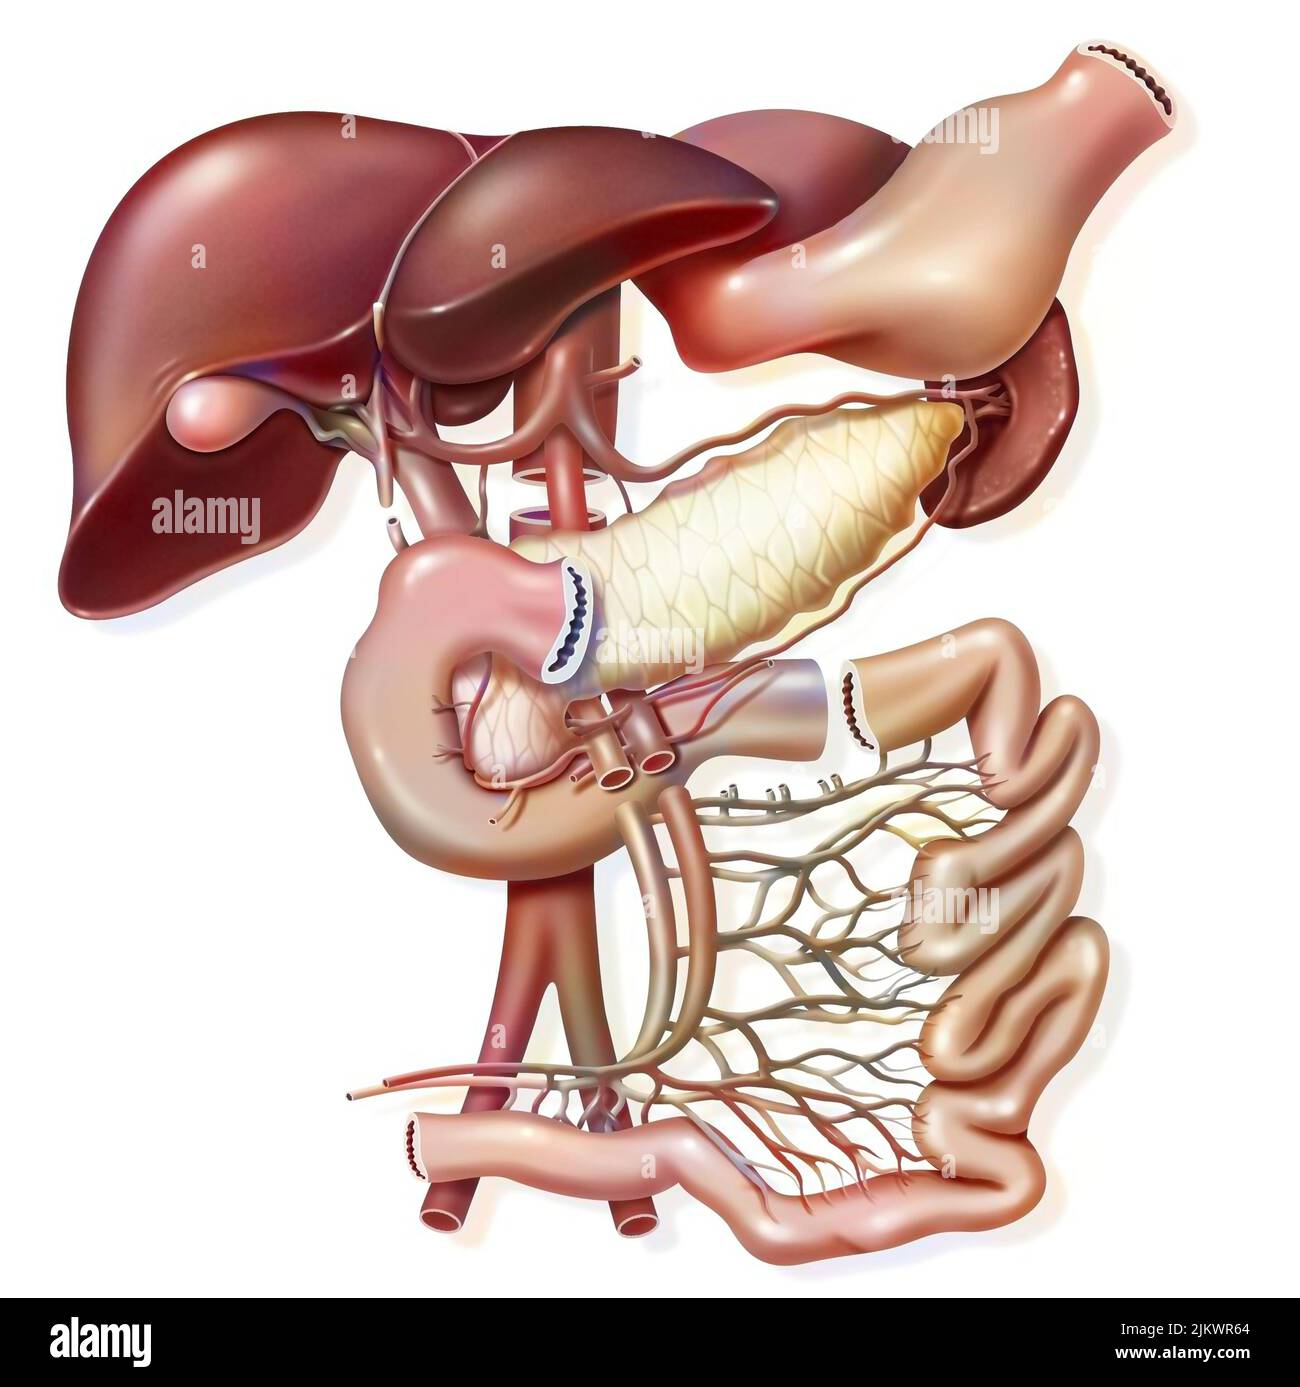 Illustration of a pancreas transplant, graft removal. Stock Photo